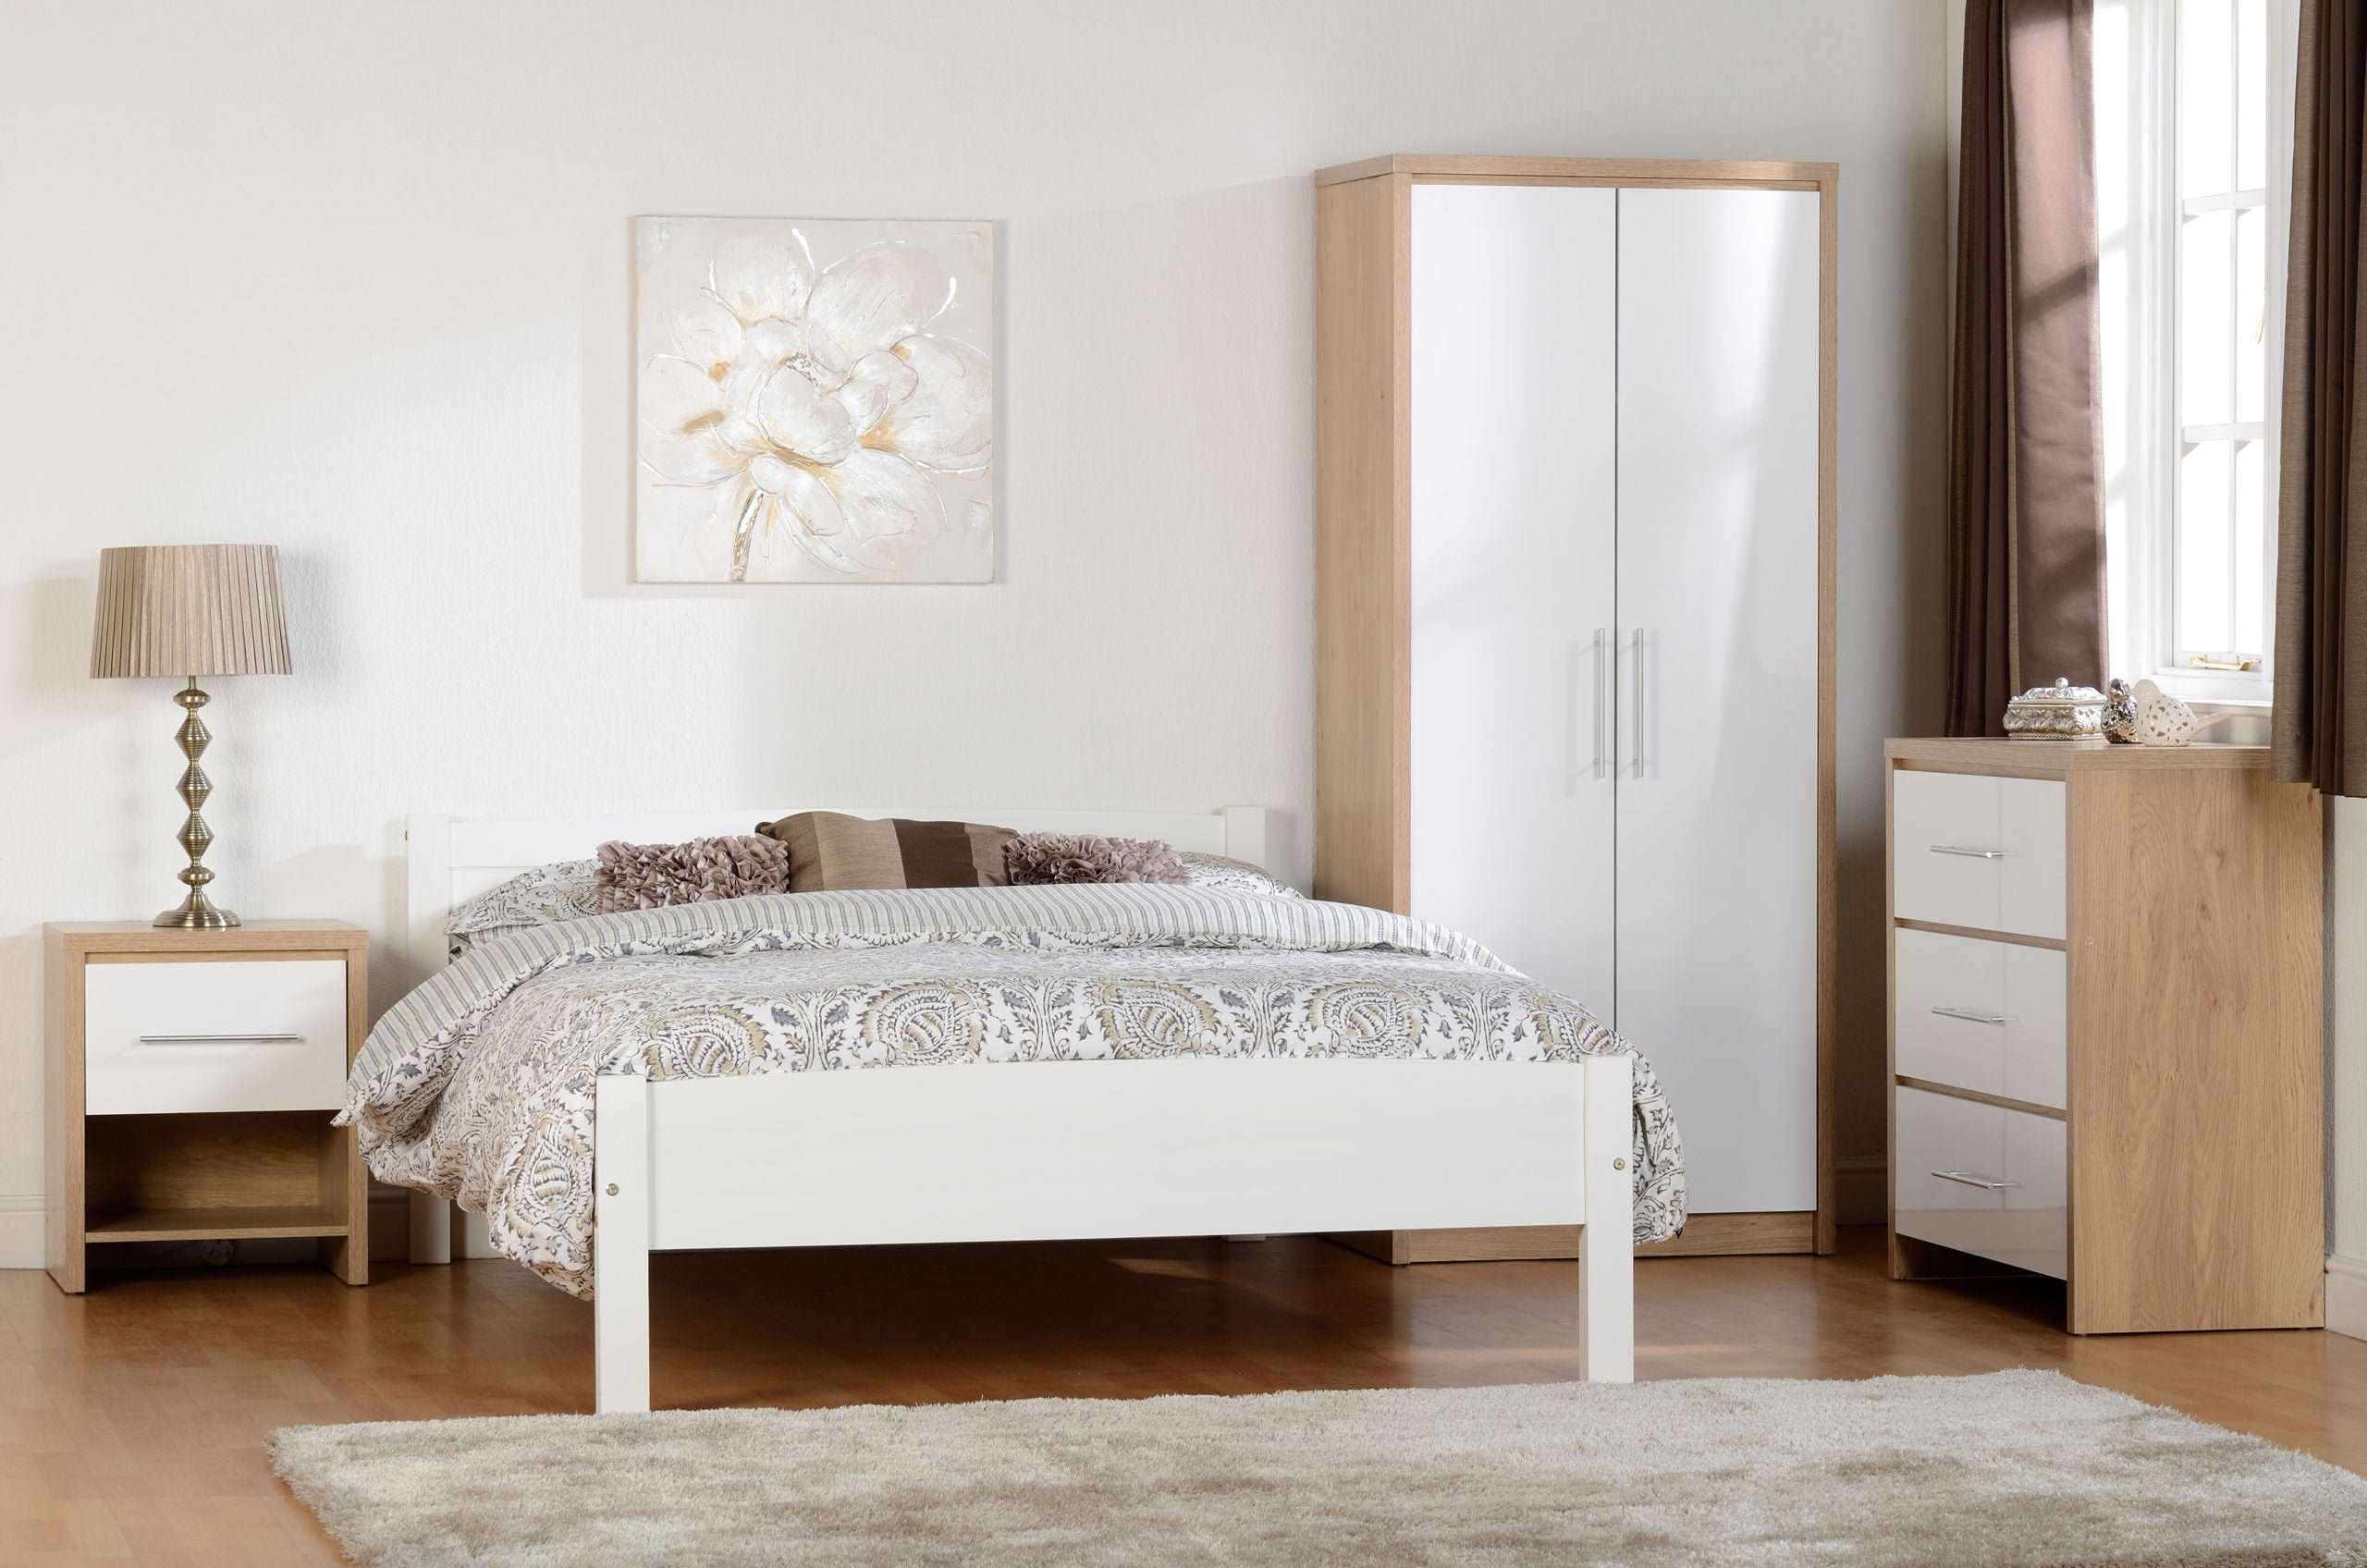 AMBER 4'6" BED Frame in White